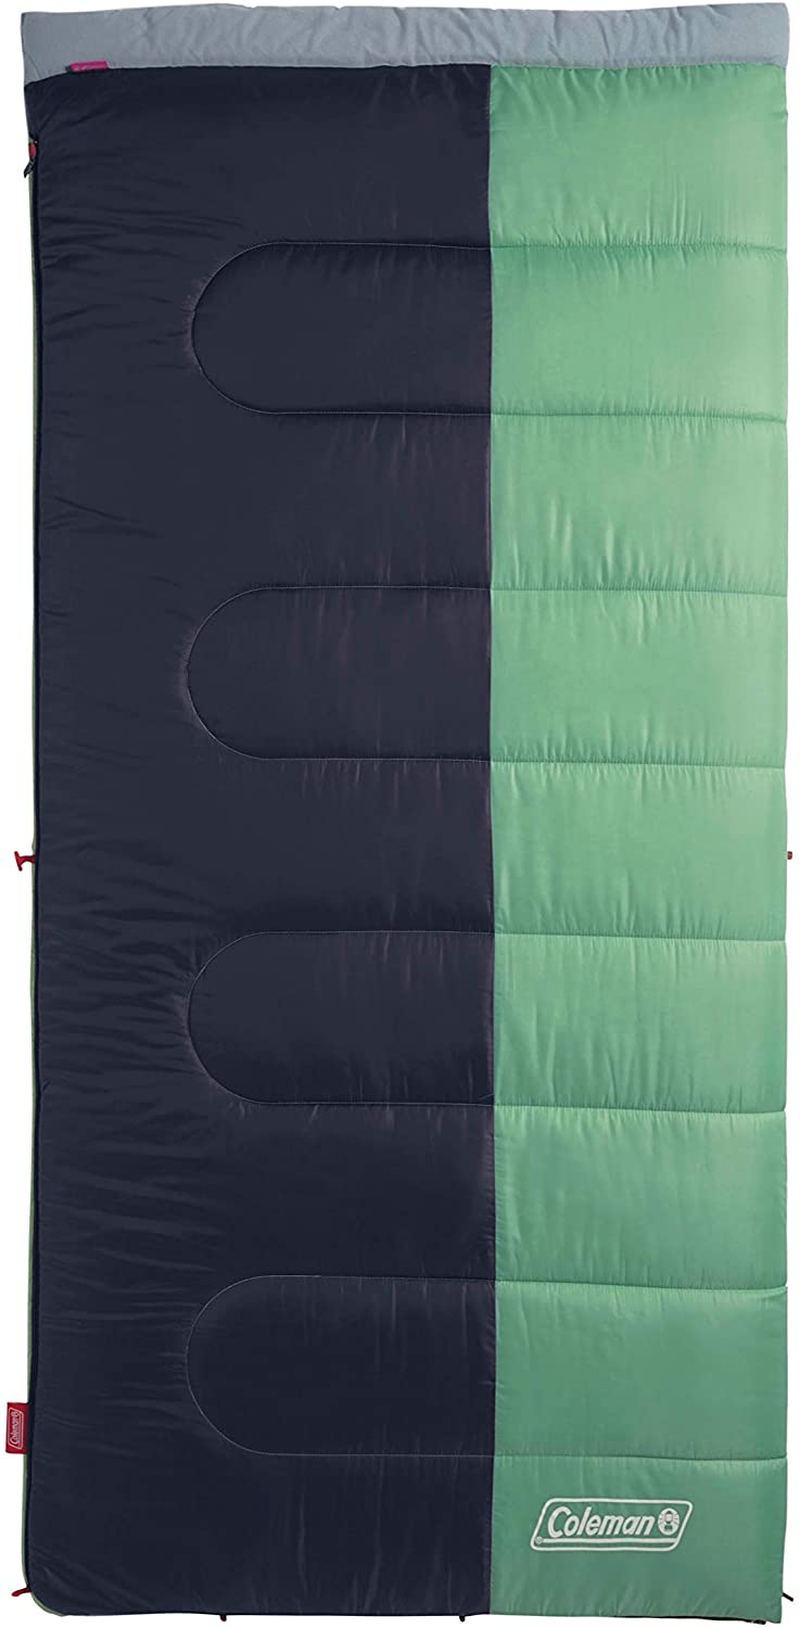 Coleman Sleeping Bag | 40°F Big and Tall Sleeping Bag | Biscayne Sleeping Bag Sporting Goods > Outdoor Recreation > Camping & Hiking > Sleeping Bags Coleman   